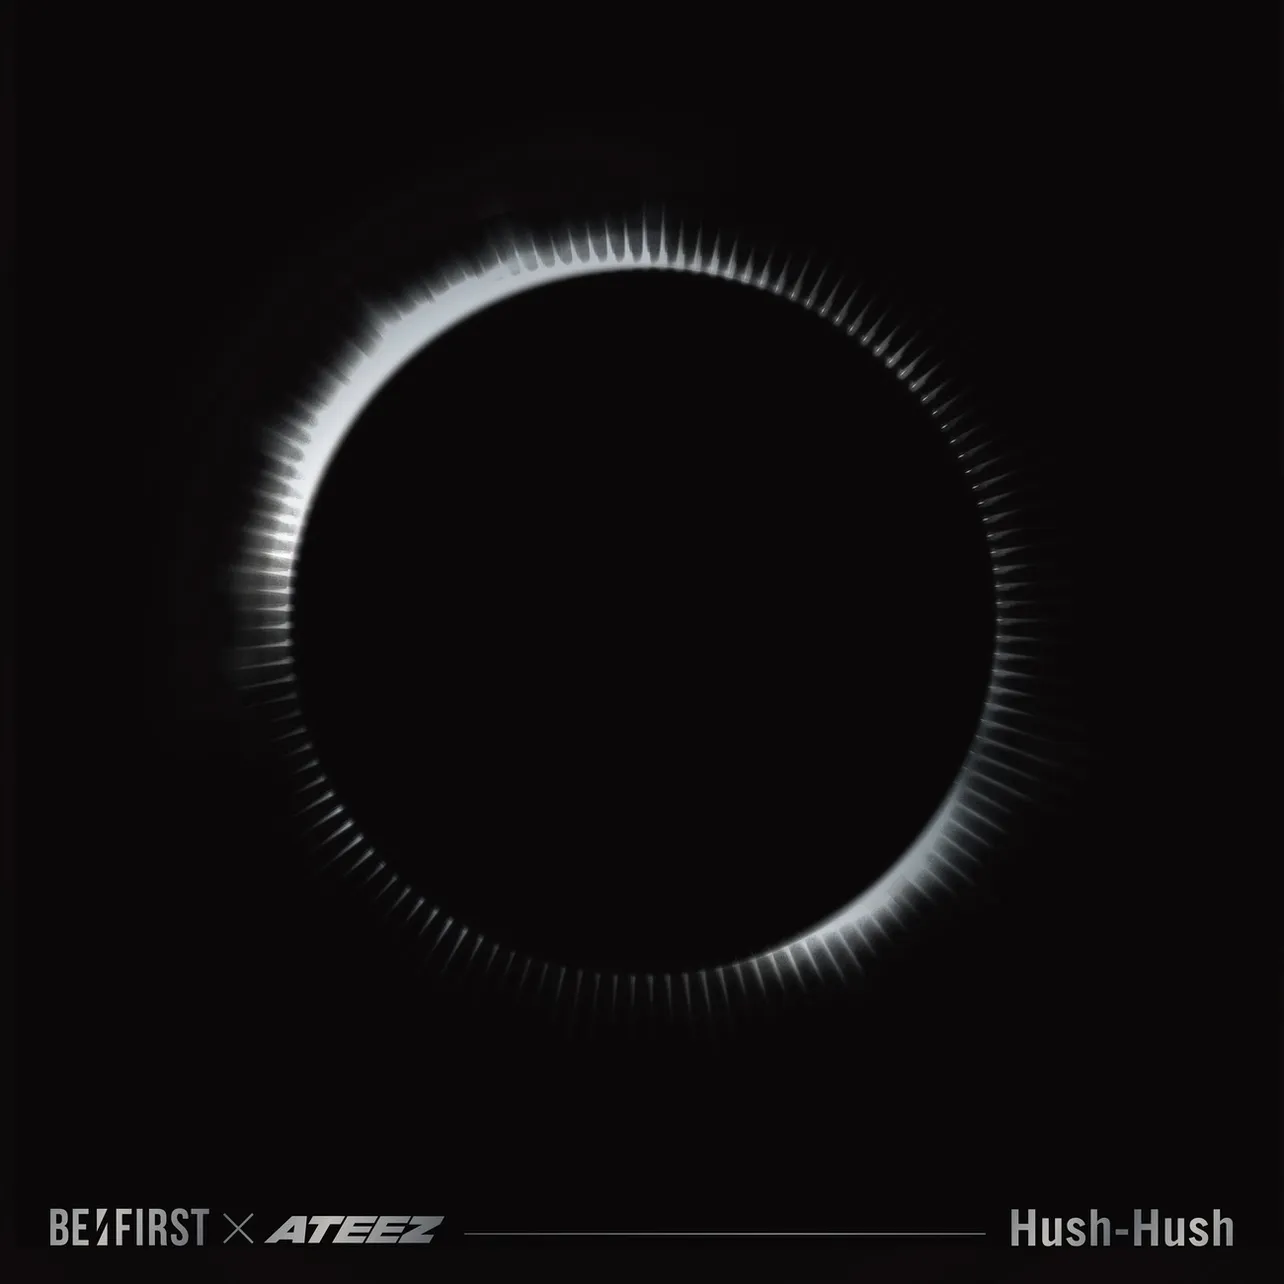 BE:FIRST X ATEEZ「Hush-Hush」ジャケット写真